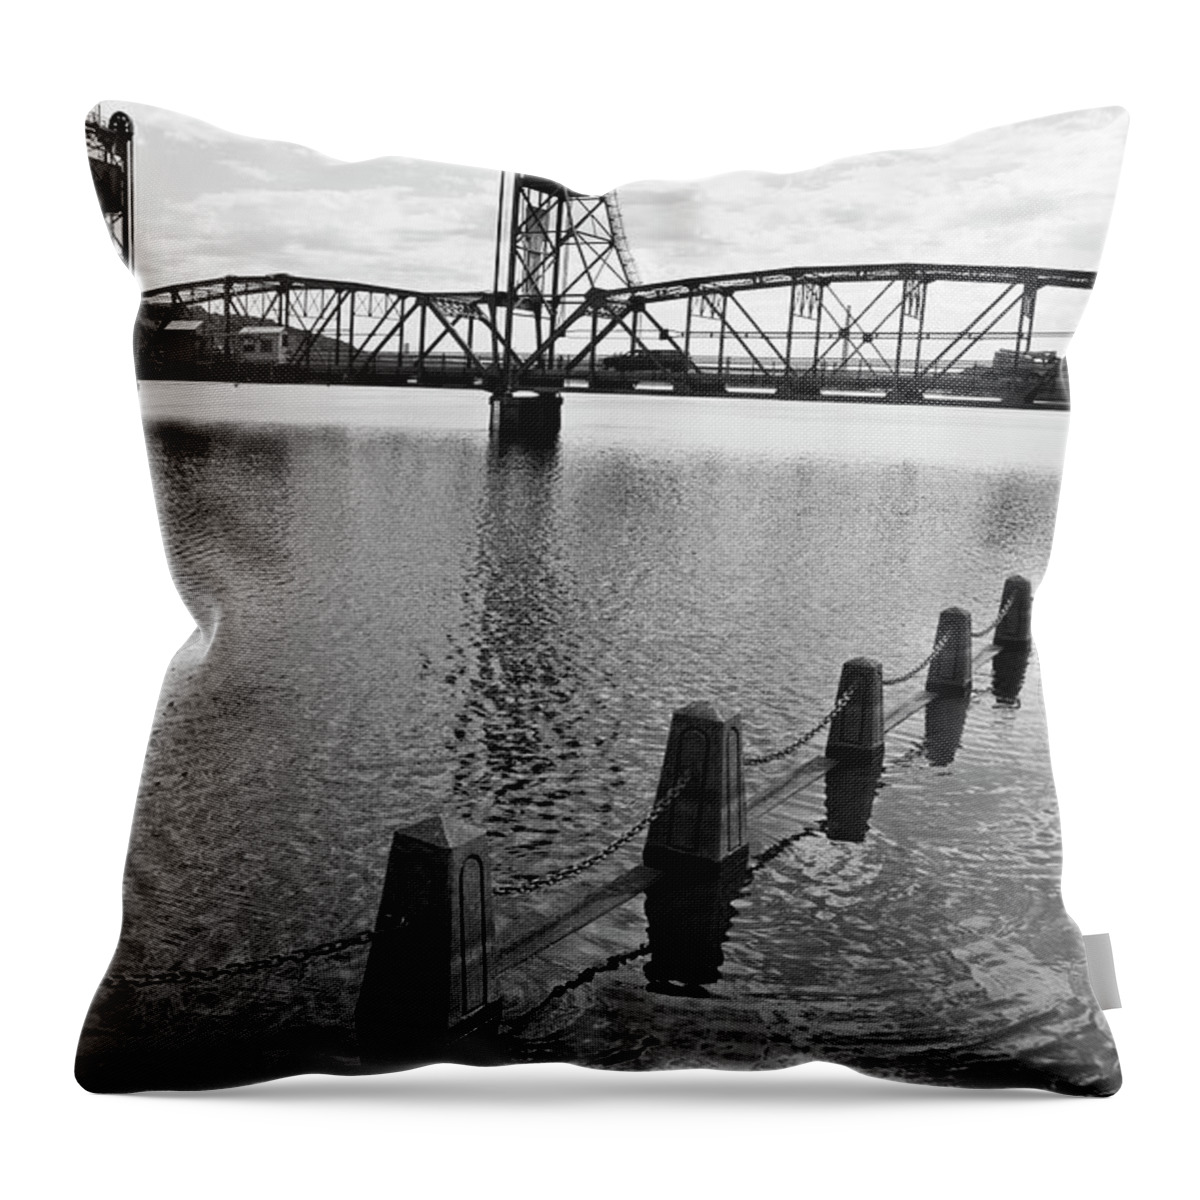 Stillwater Throw Pillow featuring the digital art Still Waters in Stillwater by Susan Stone